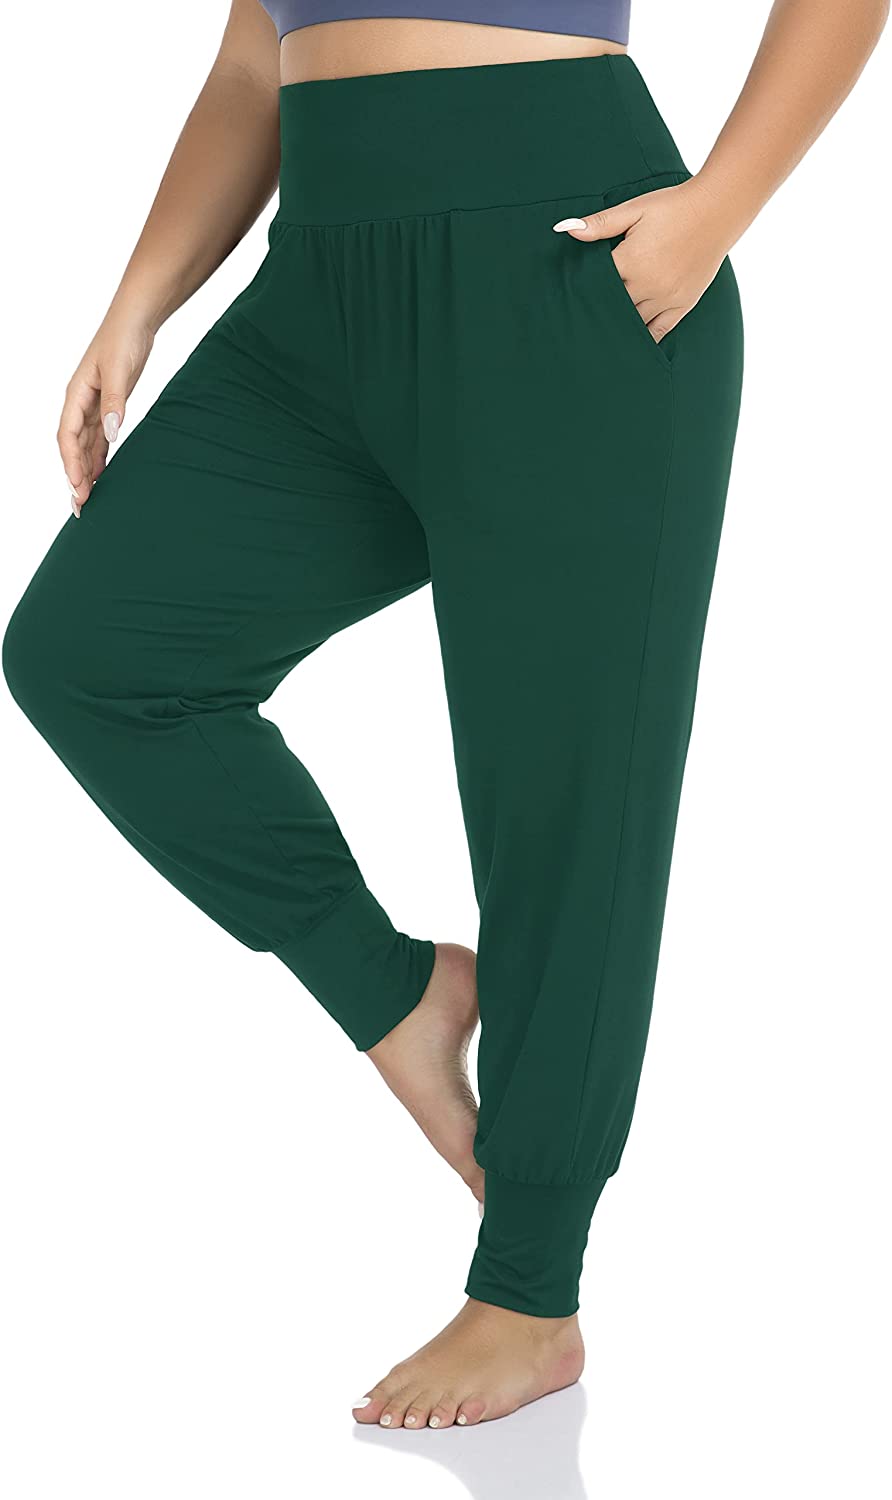  ZERDOCEAN Women's Plus Size Casual Lounge Yoga Pants